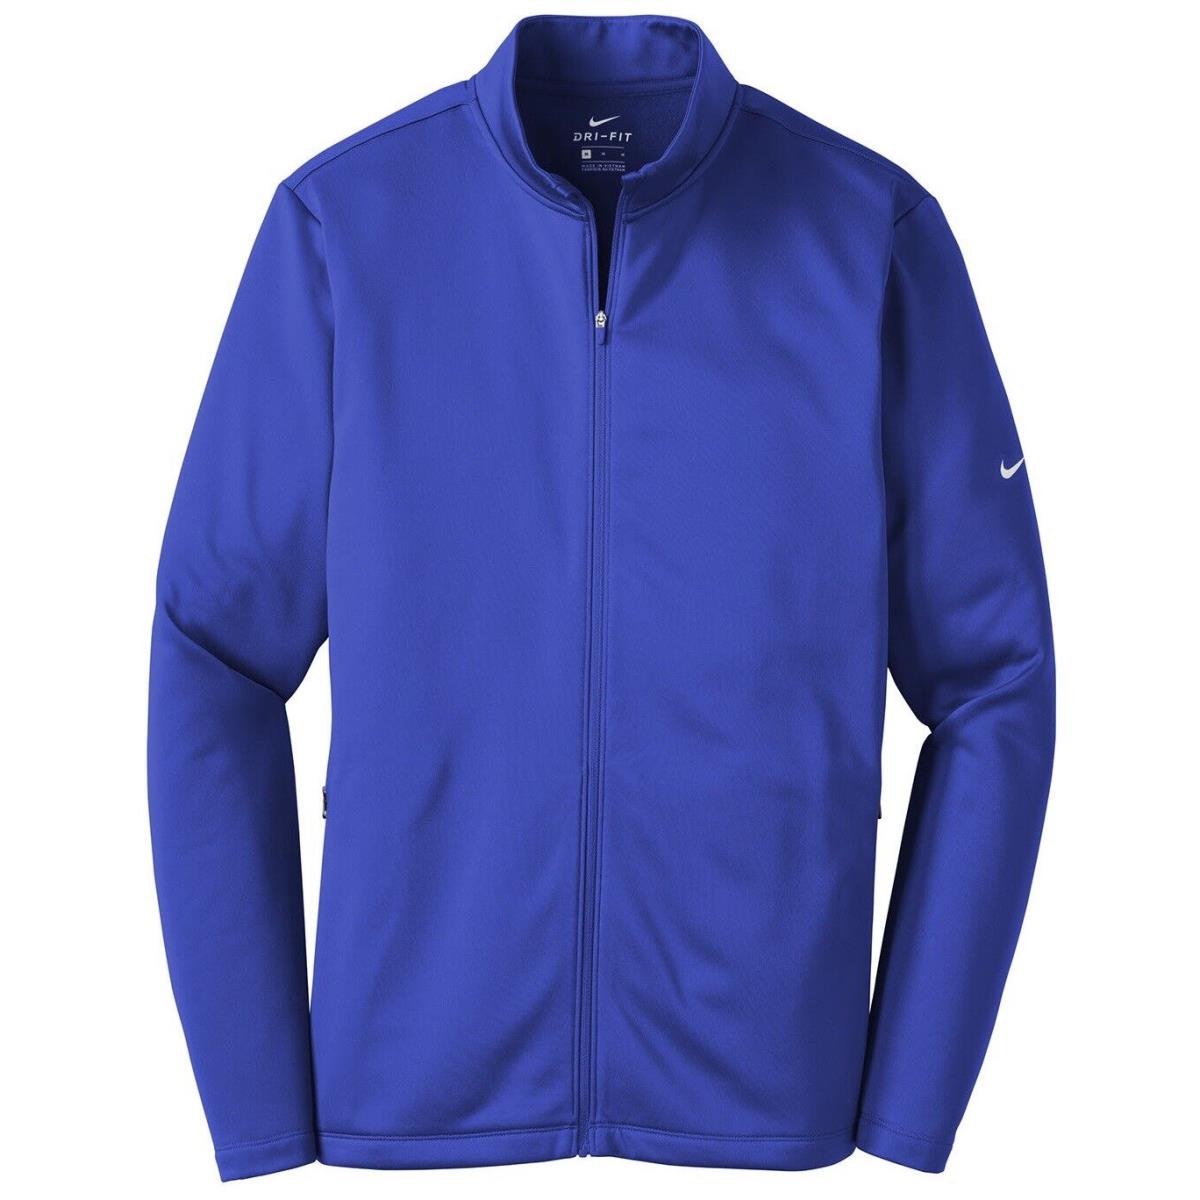 Men`s Nike Therma Fit Moisture Wicking Fleece Full Fip Jacket Pockets XS-4XL Royal Blue